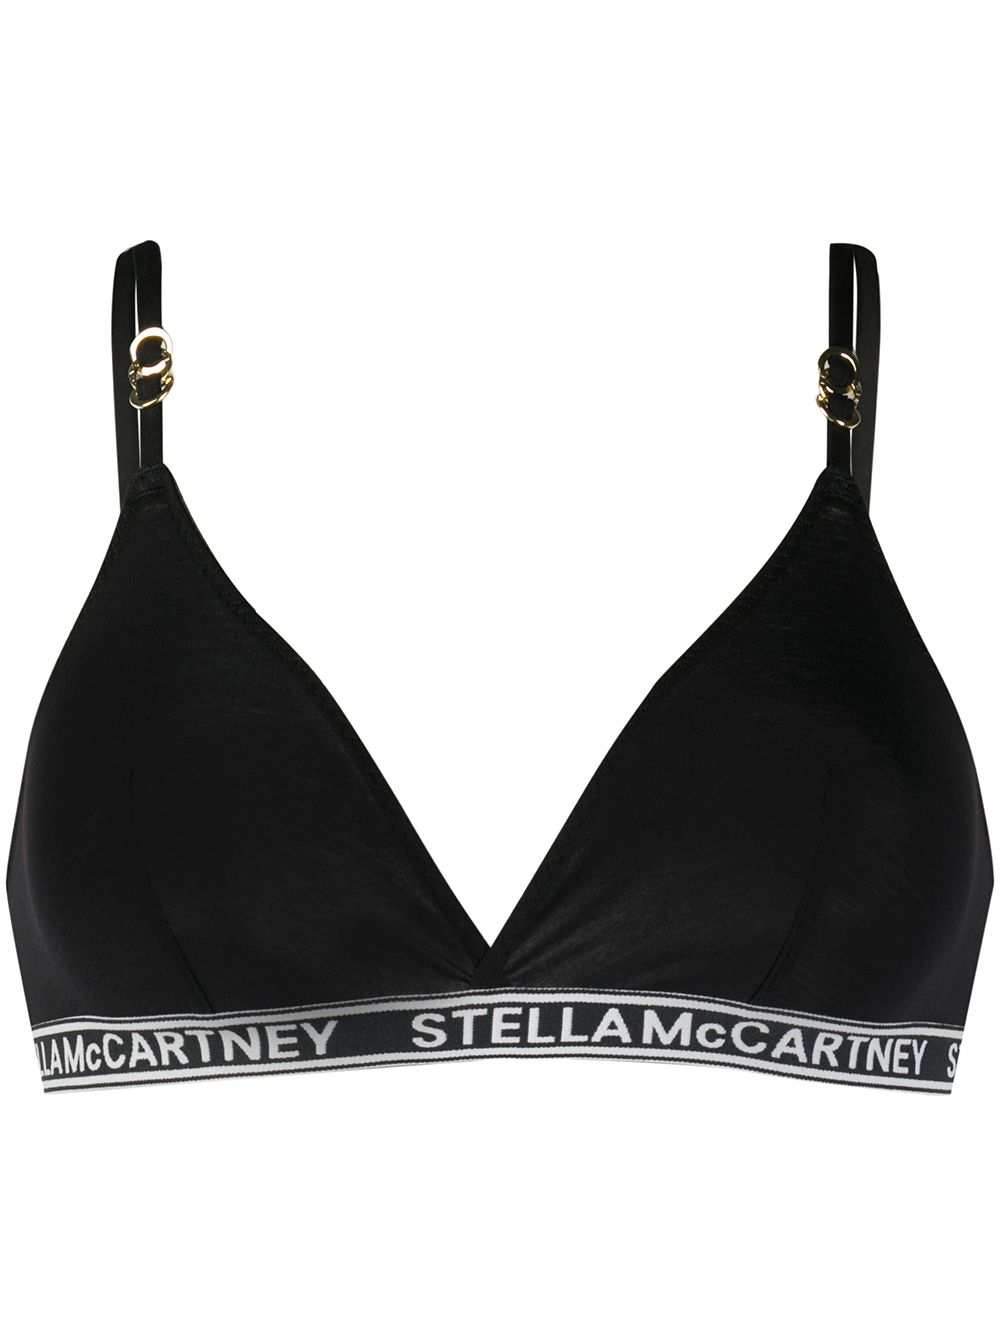 Stella McCartney jacquard logo triangle bra - Black von Stella McCartney